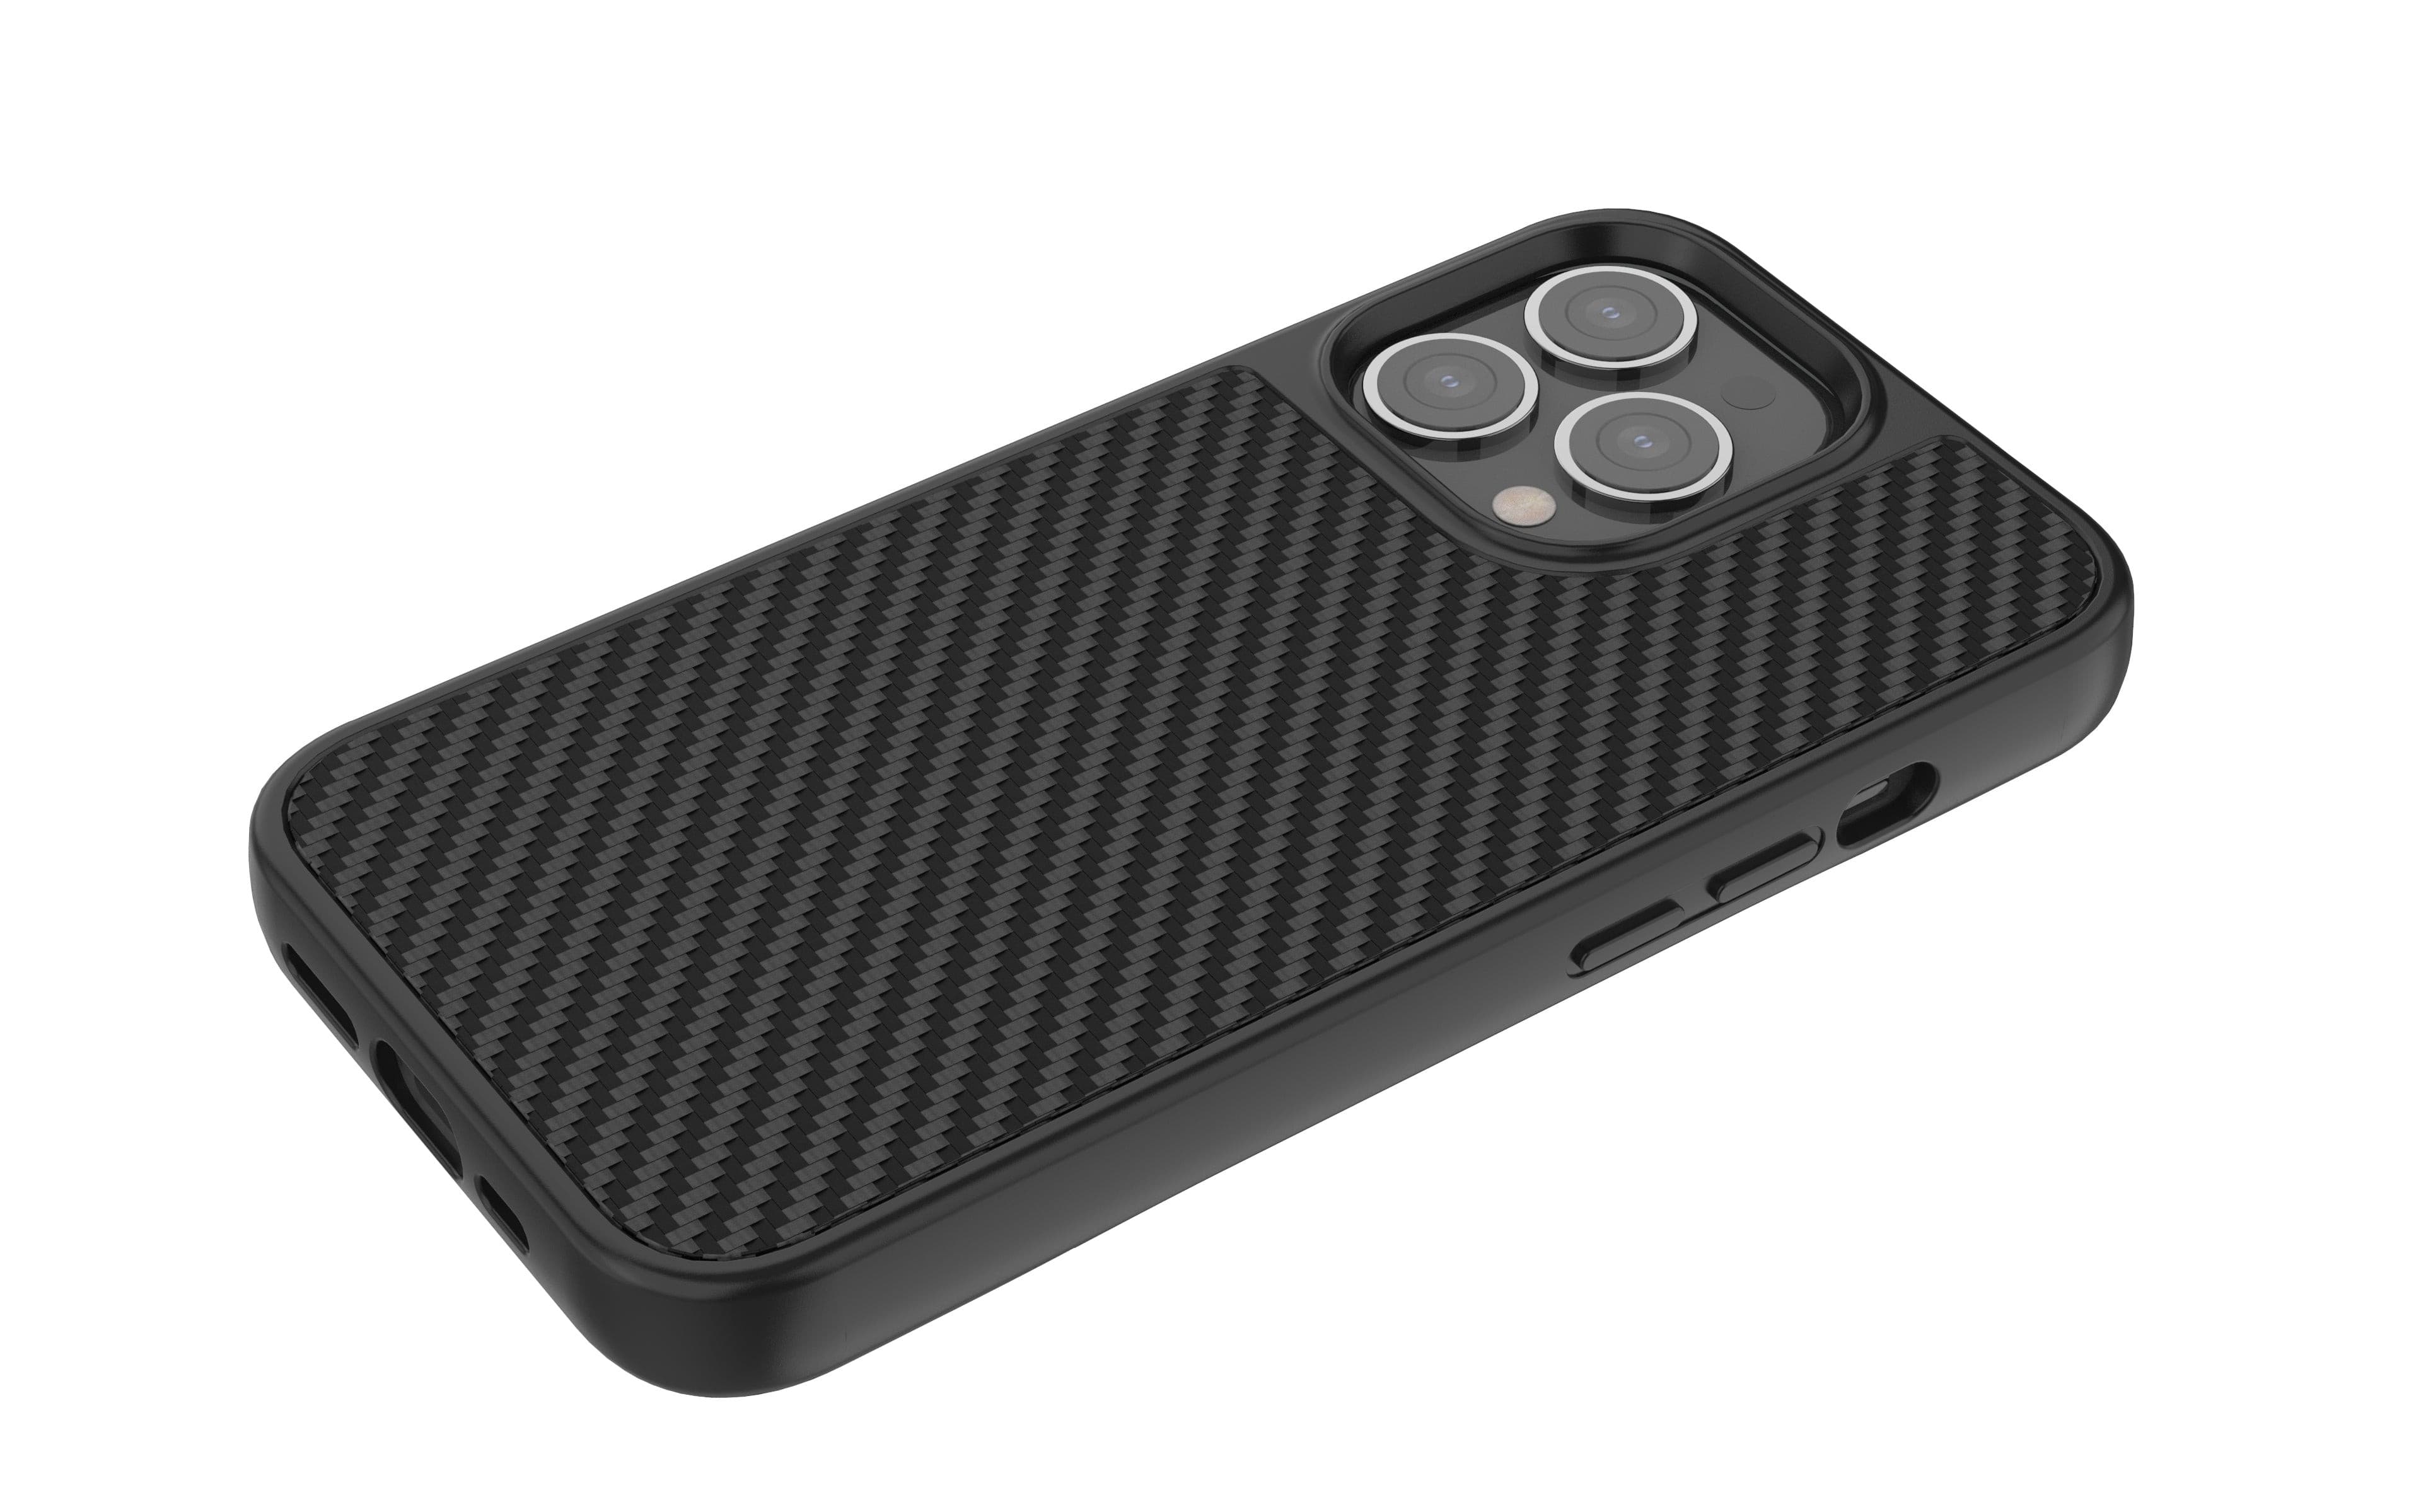 Impact Zero Kevlar Protective Case for iPhone 13 Pro Max.